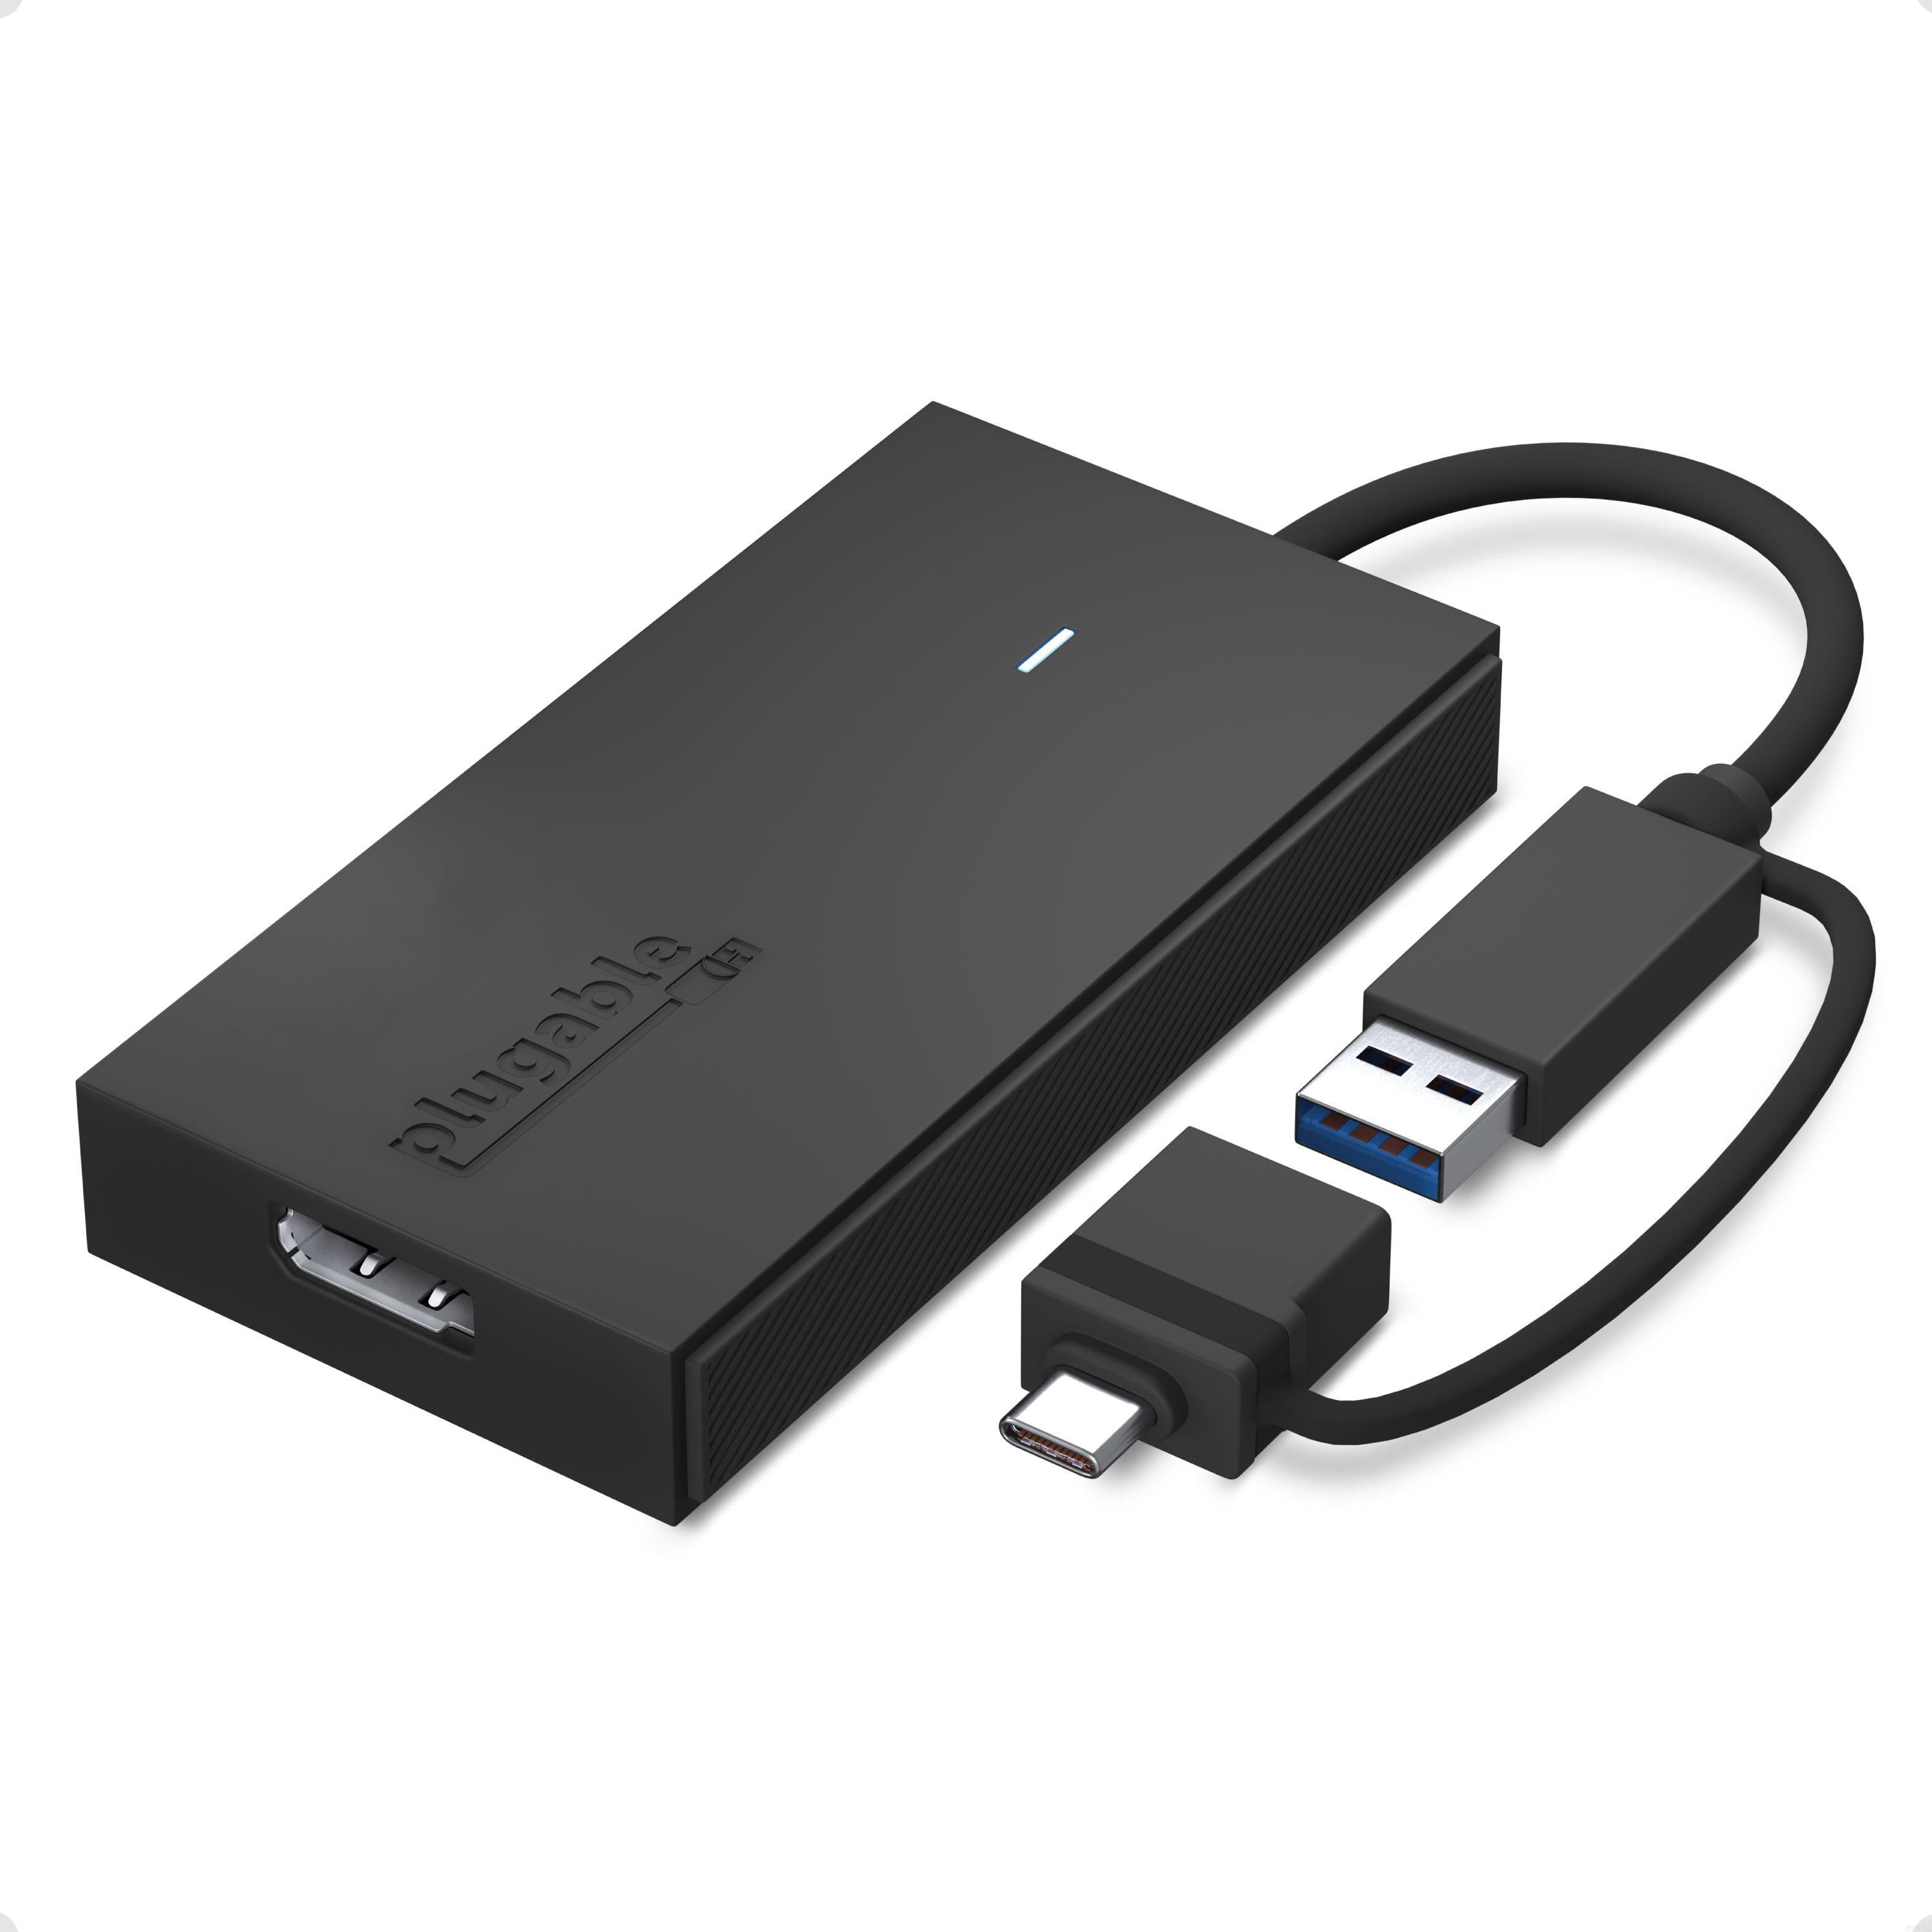 Plugable USB-C or USB 3.0 to DisplayPort Adapter – Plugable